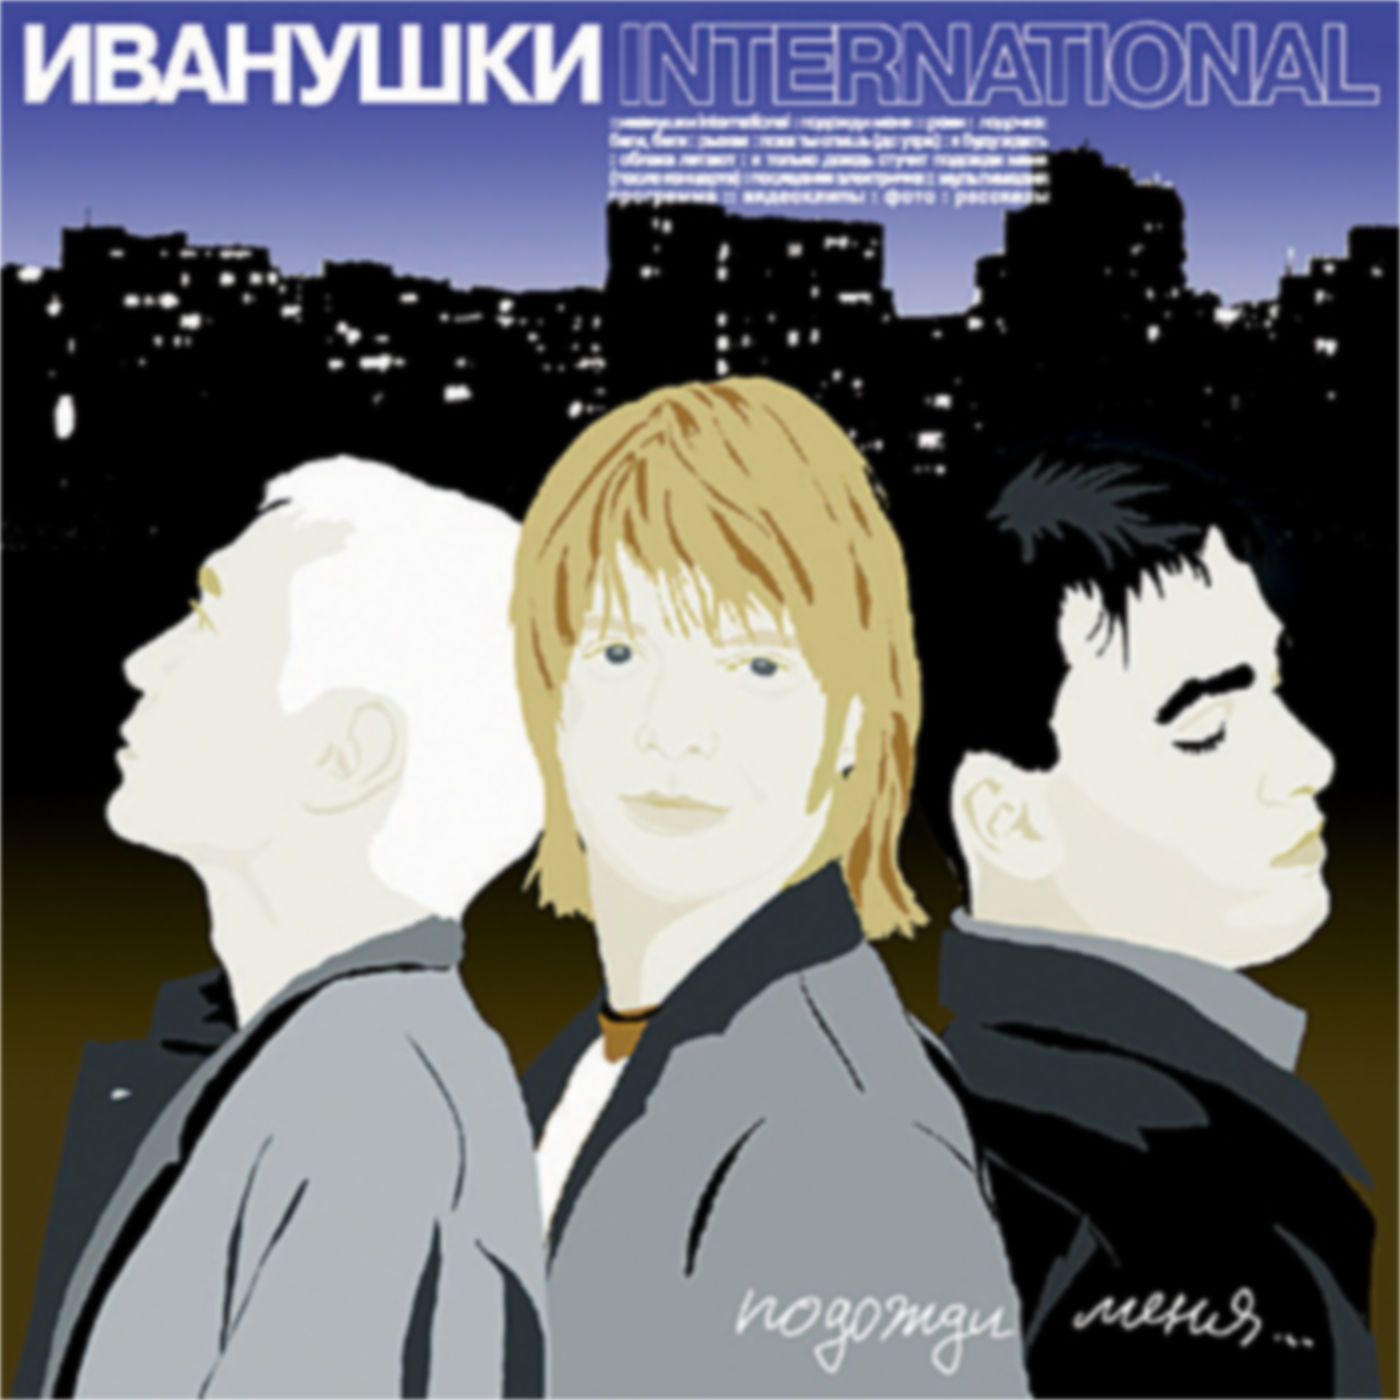 Иванушки International - Подожди меня (2000)